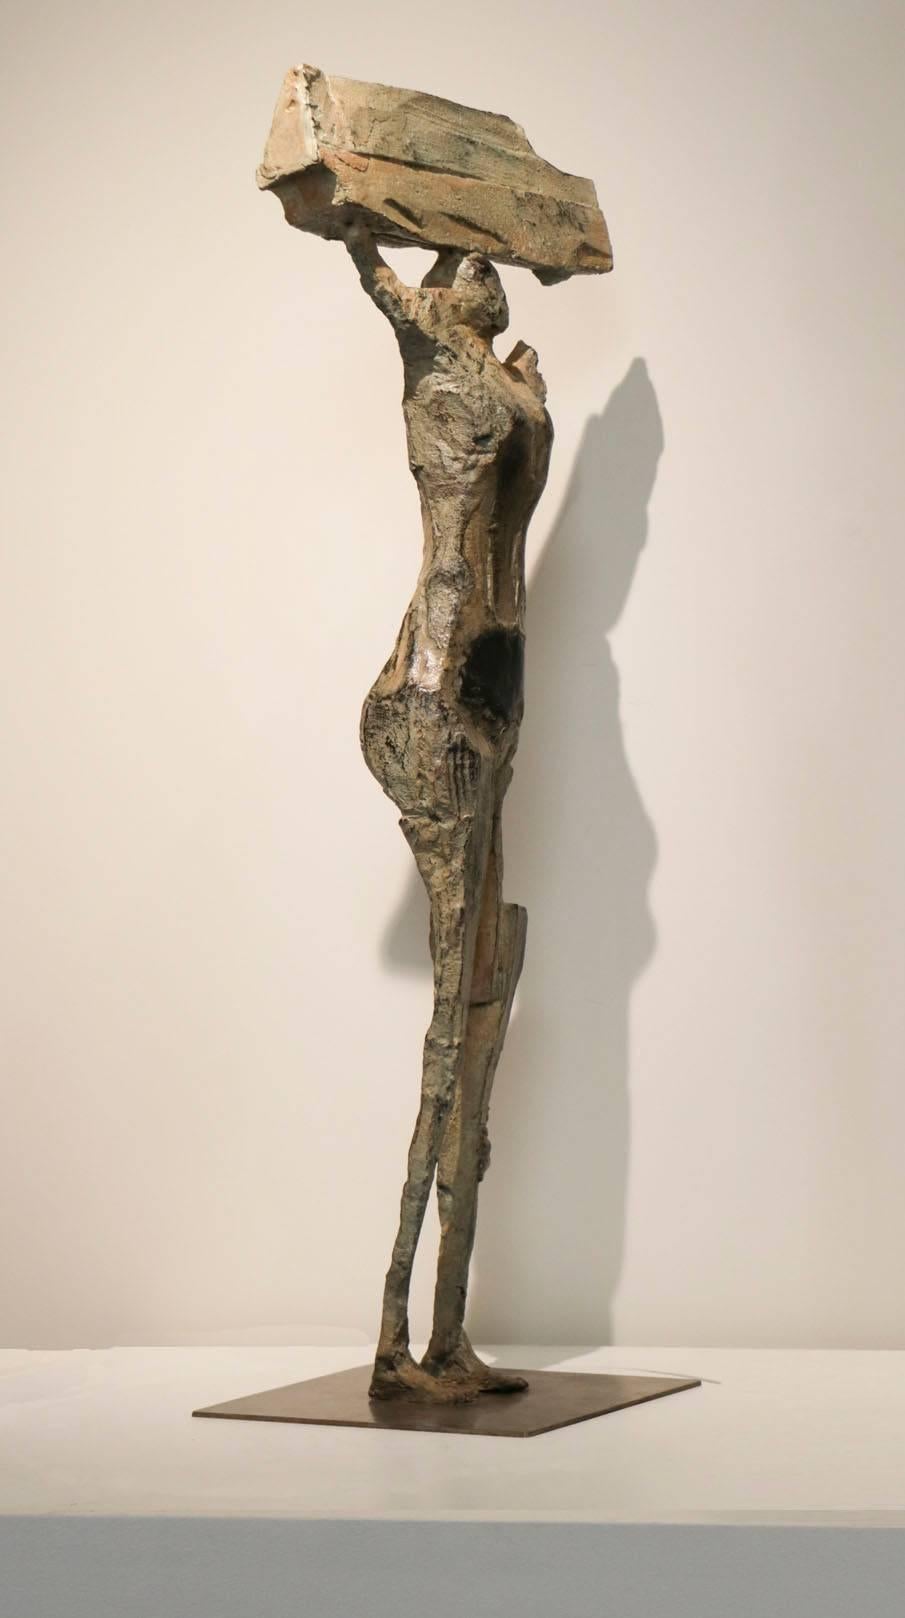 Carytid - Sculpture by John Denning